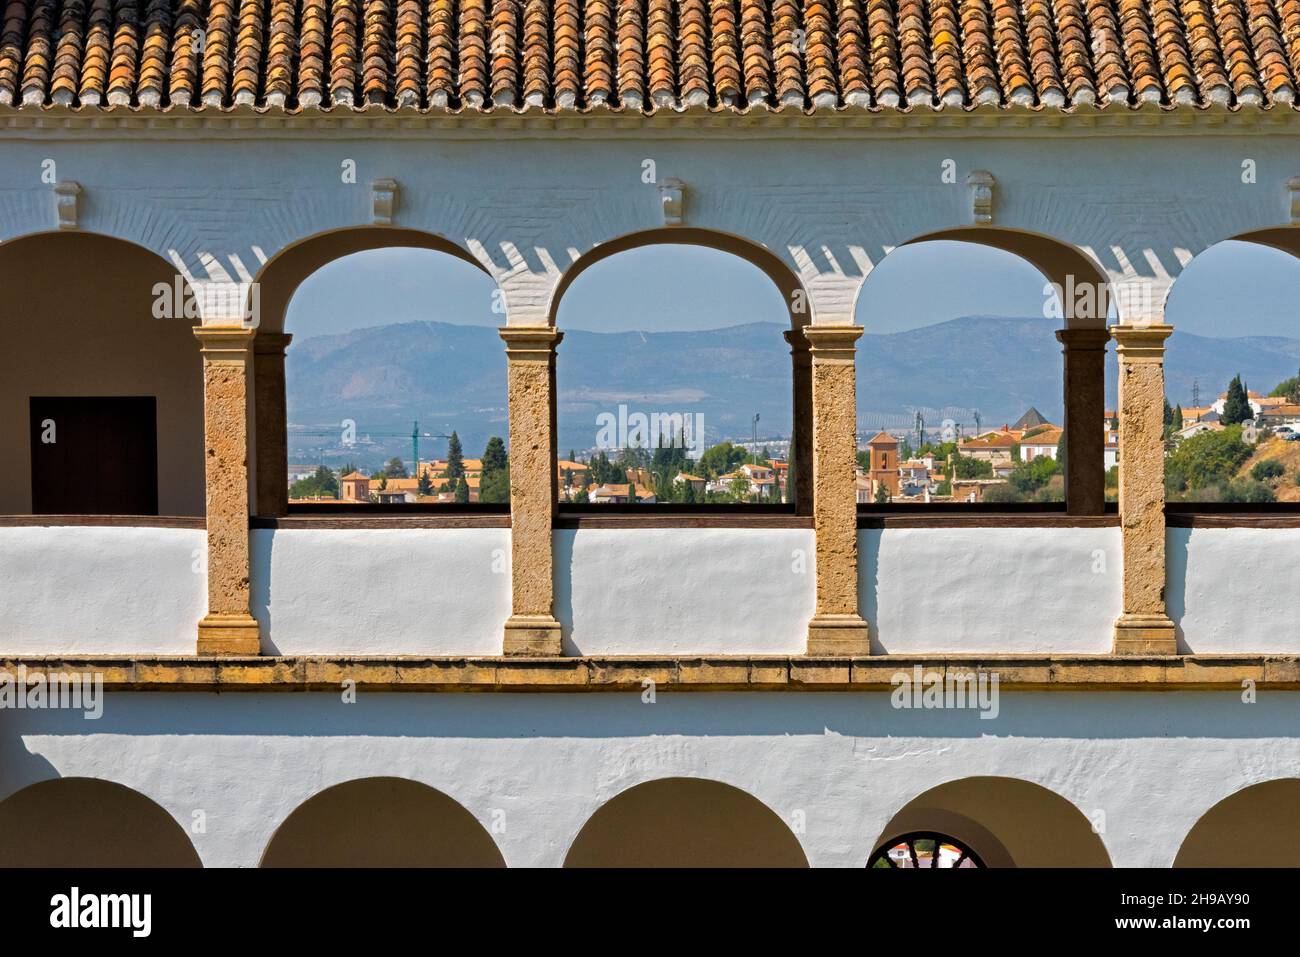 View from arch window of Palacio de Generalife in Alhambra, Granada, Granada Province, Andalusia Autonomous Community, Spain Stock Photo